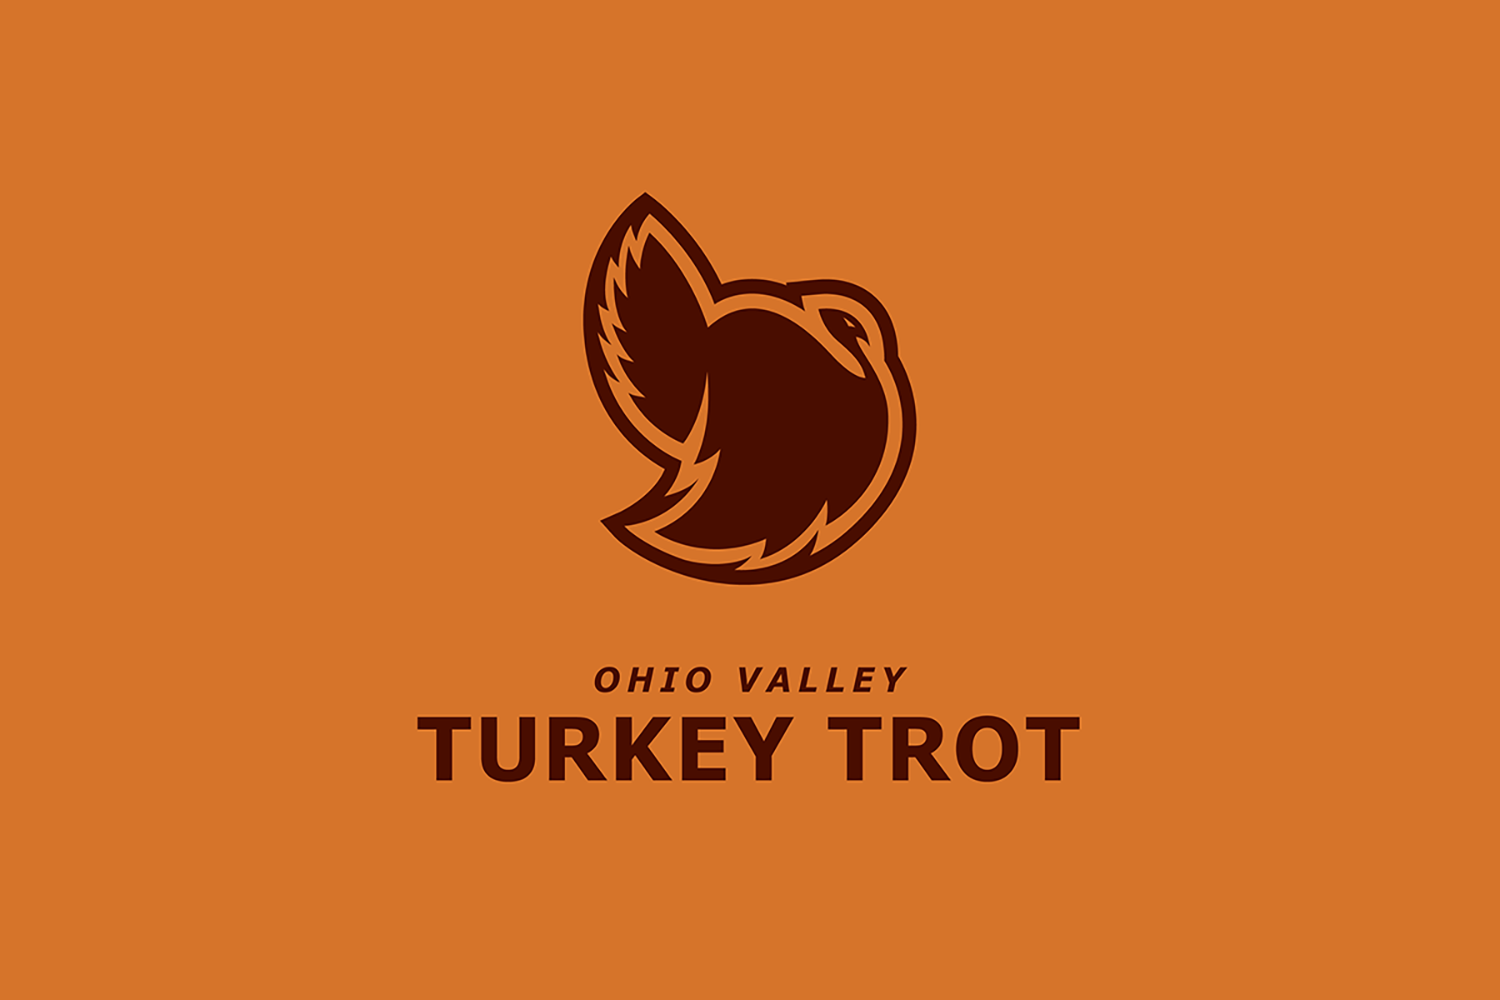 Ohio Valley 5K Turkey Trot logo - East Liverpool, Ohio